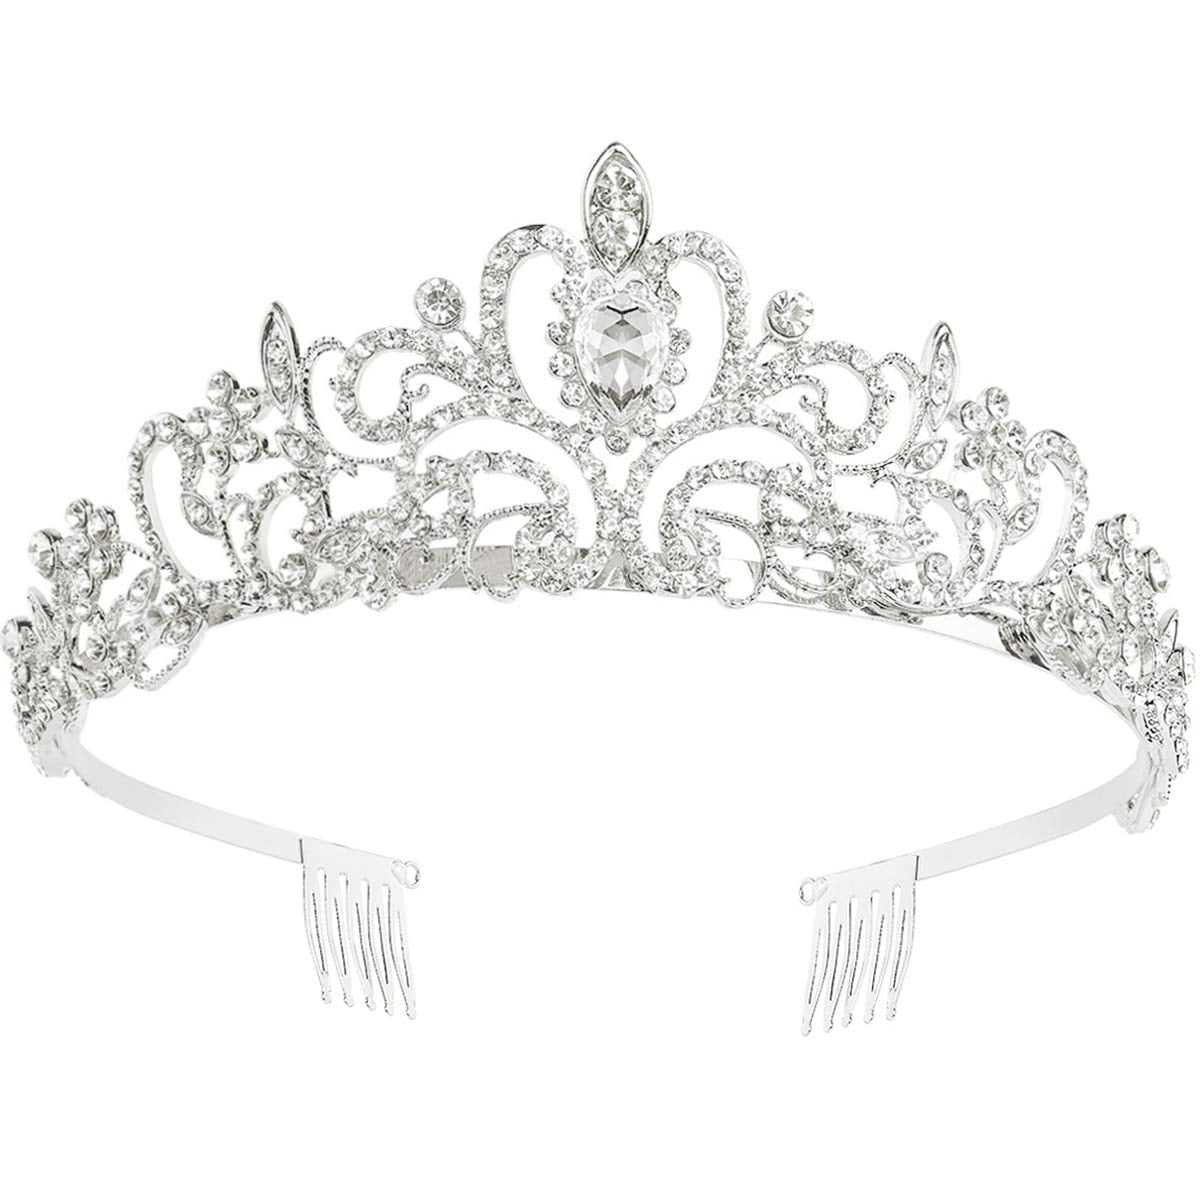 Vintage Wedding Hair Accessories Crystal Crown Pageant Tiara Headpiece Jewelry 